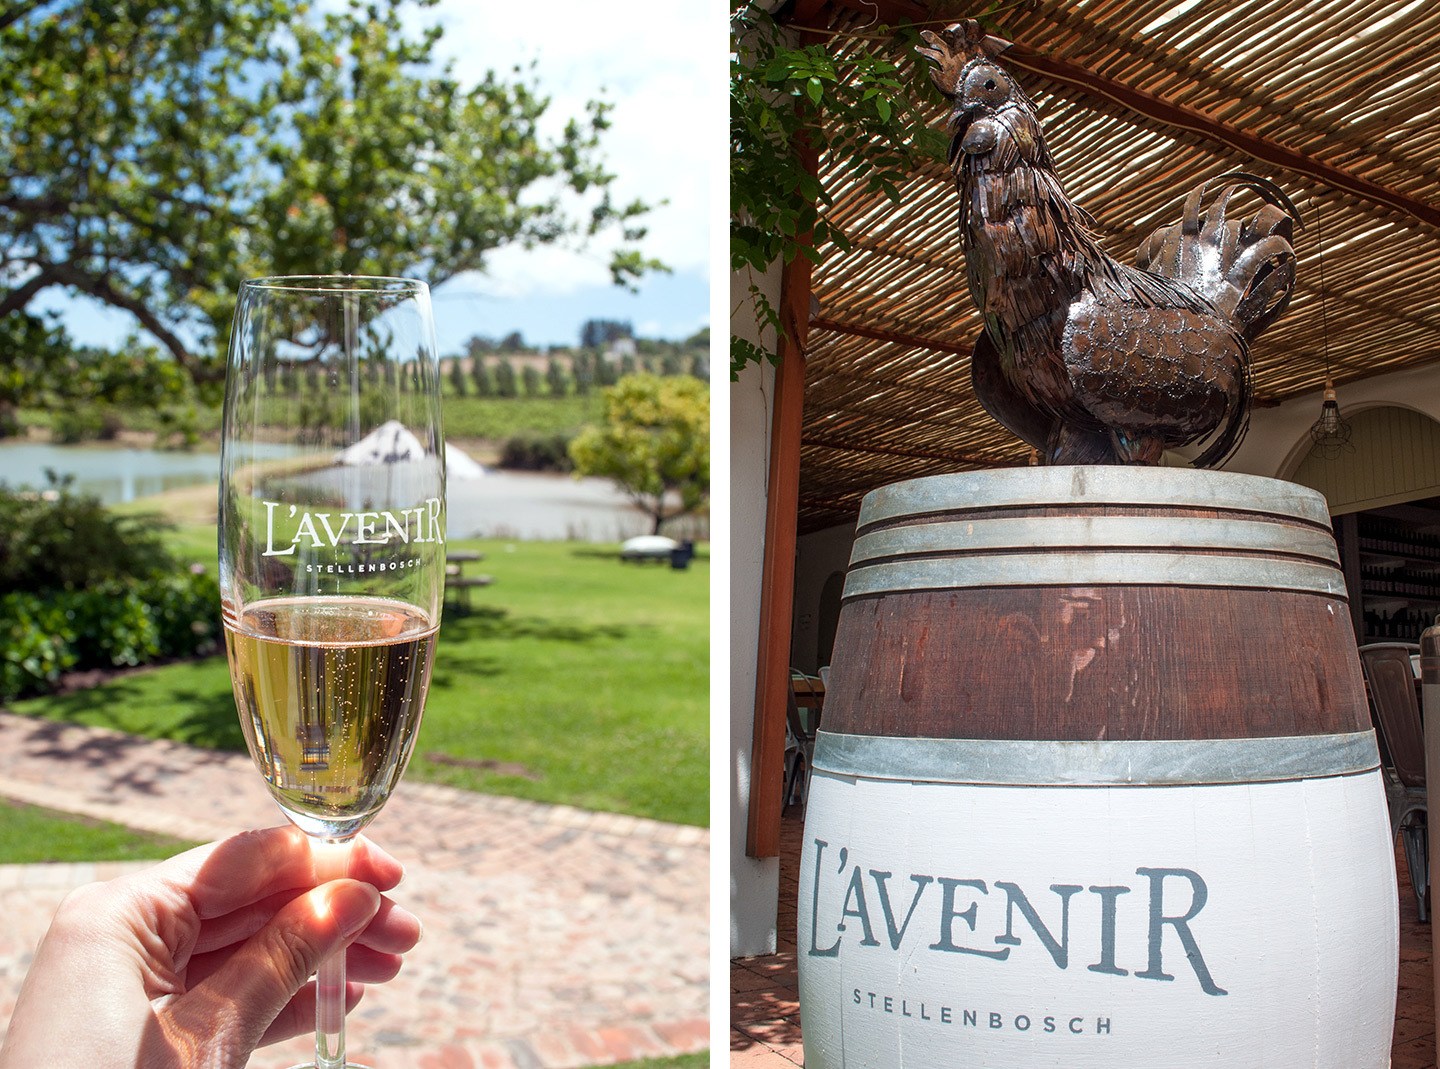 L'Avenir winery in Stellenbosch, South Africa